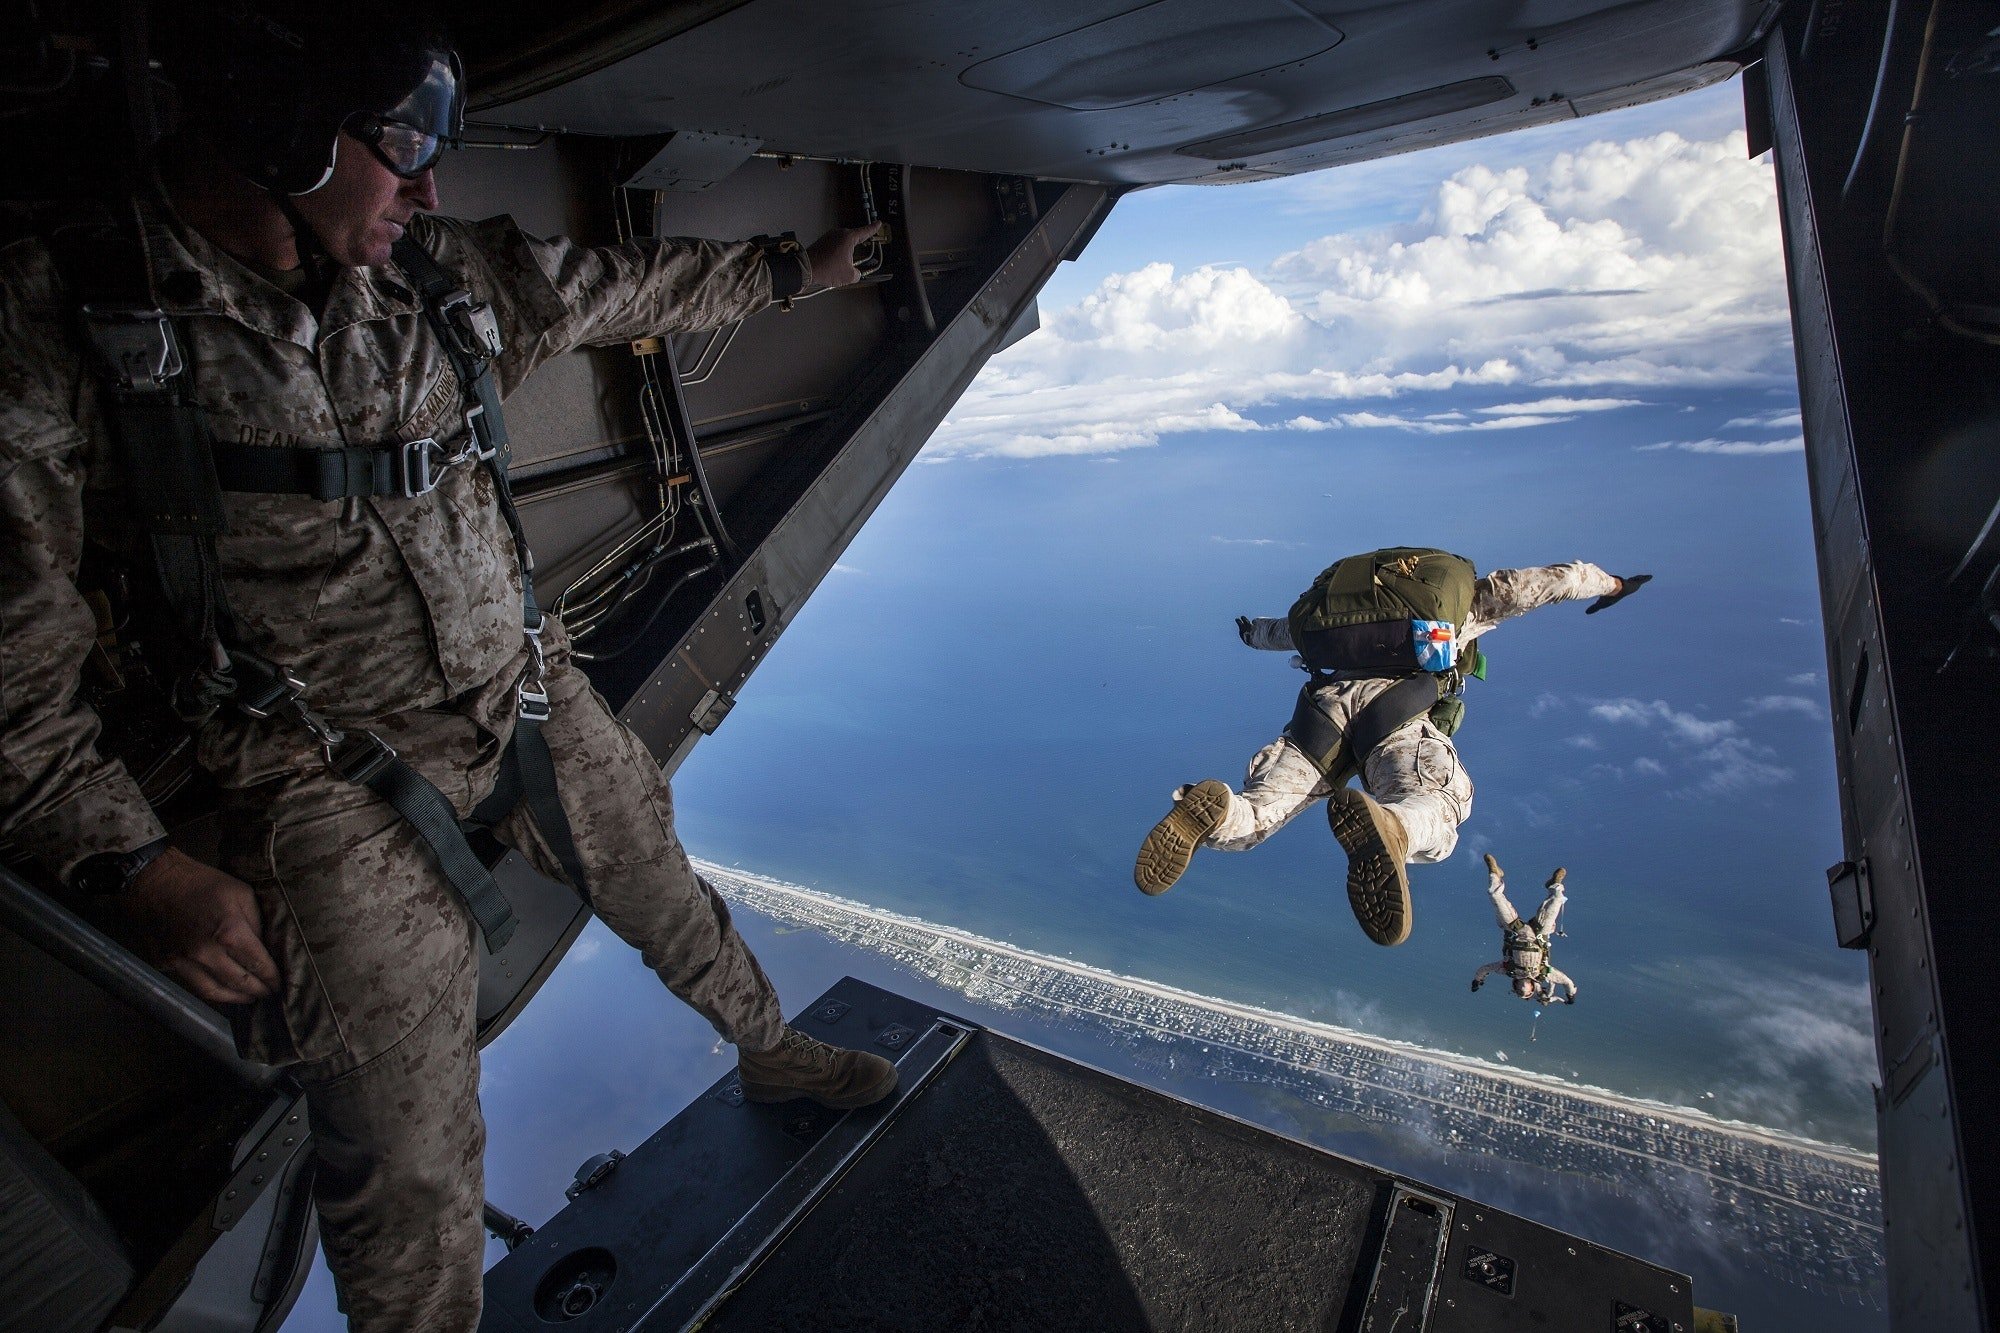 An image of men skydiving | Photo: Pexels